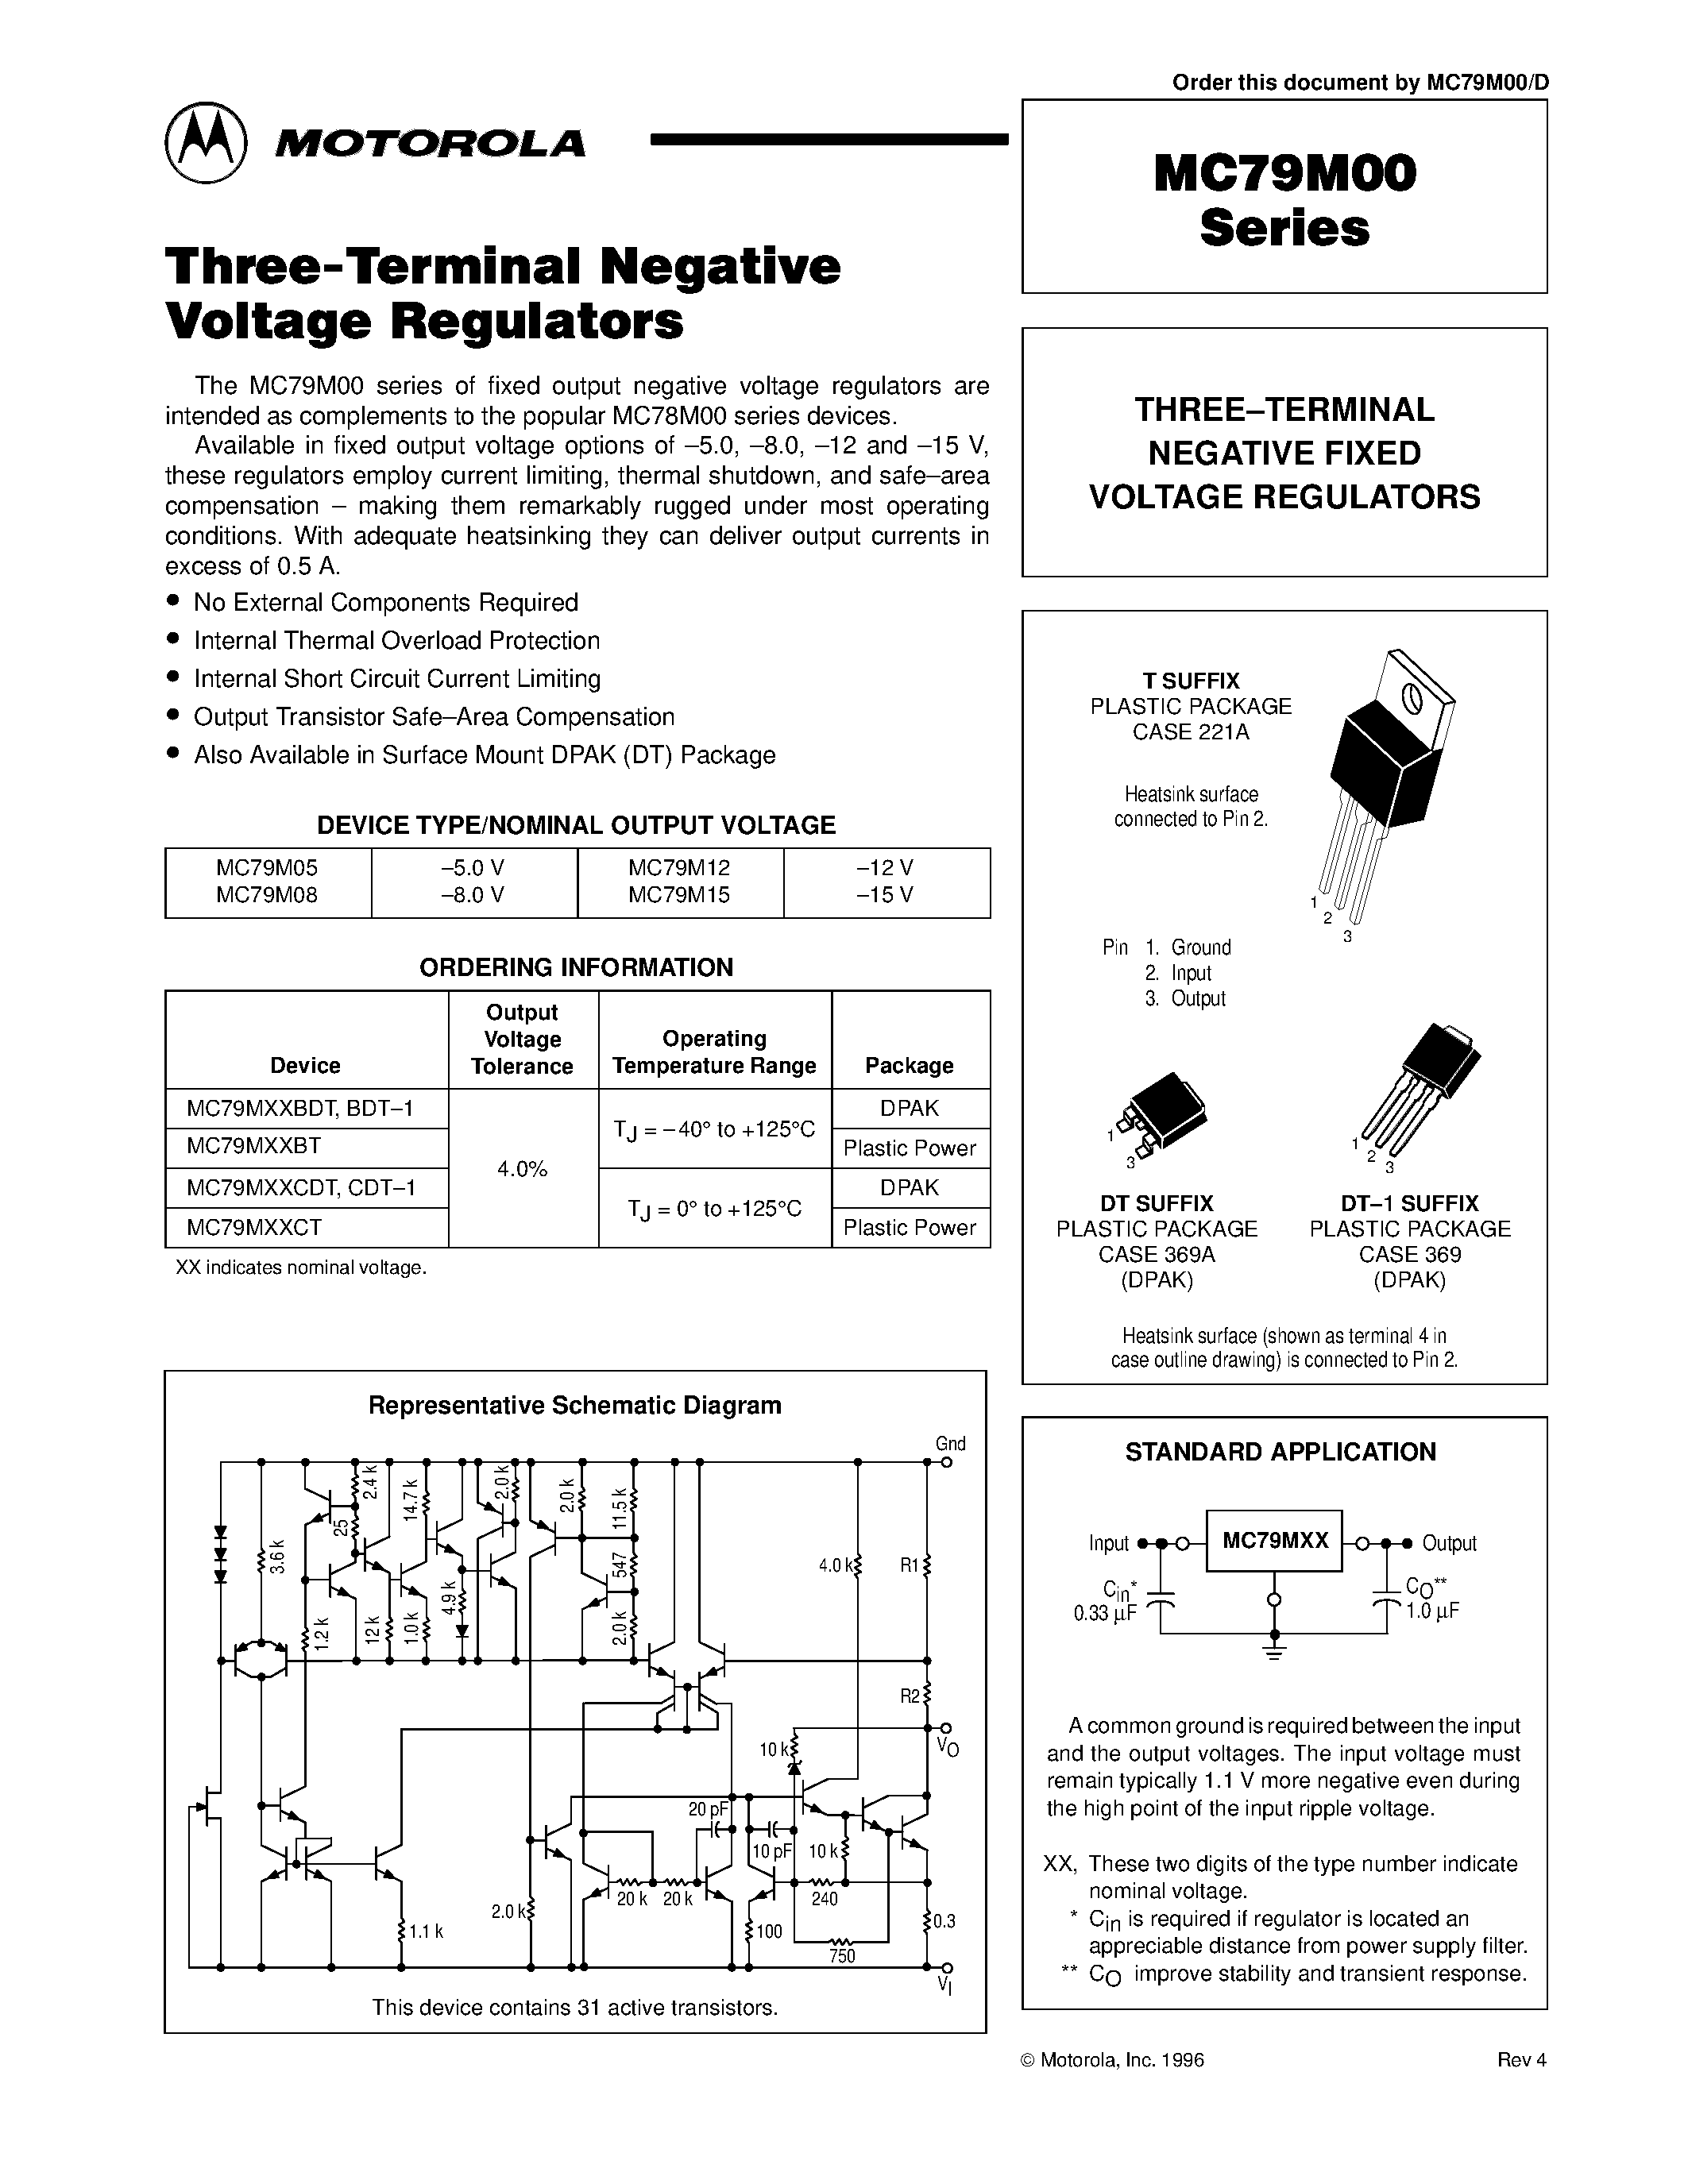 Datasheet MC79M08CDT - THREE-TERMINAL NEGATIVE FIXED VOLTAGE REGULATORS page 1